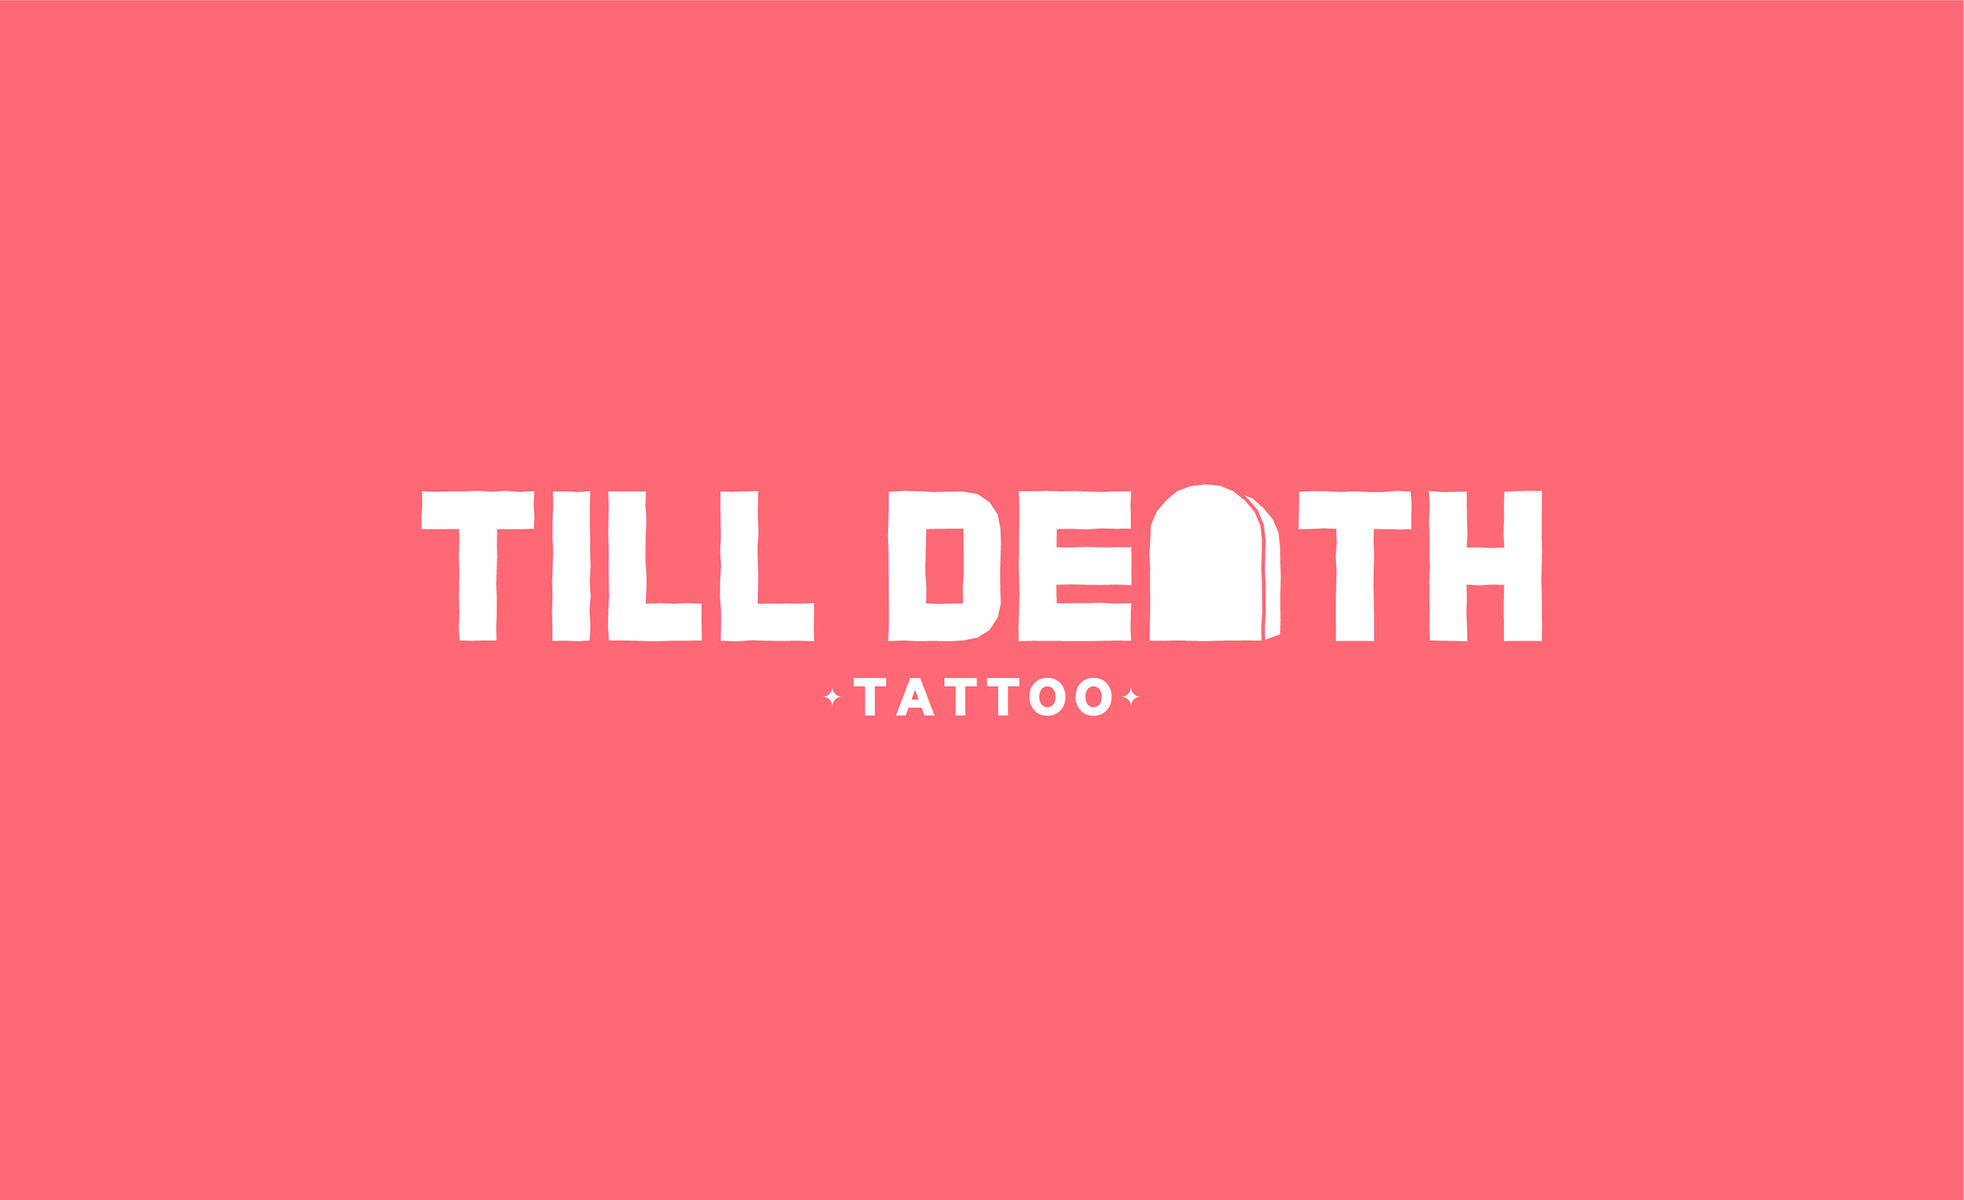 New Zealand Design Agency Creates a Brand for a Local Tattoo Studio